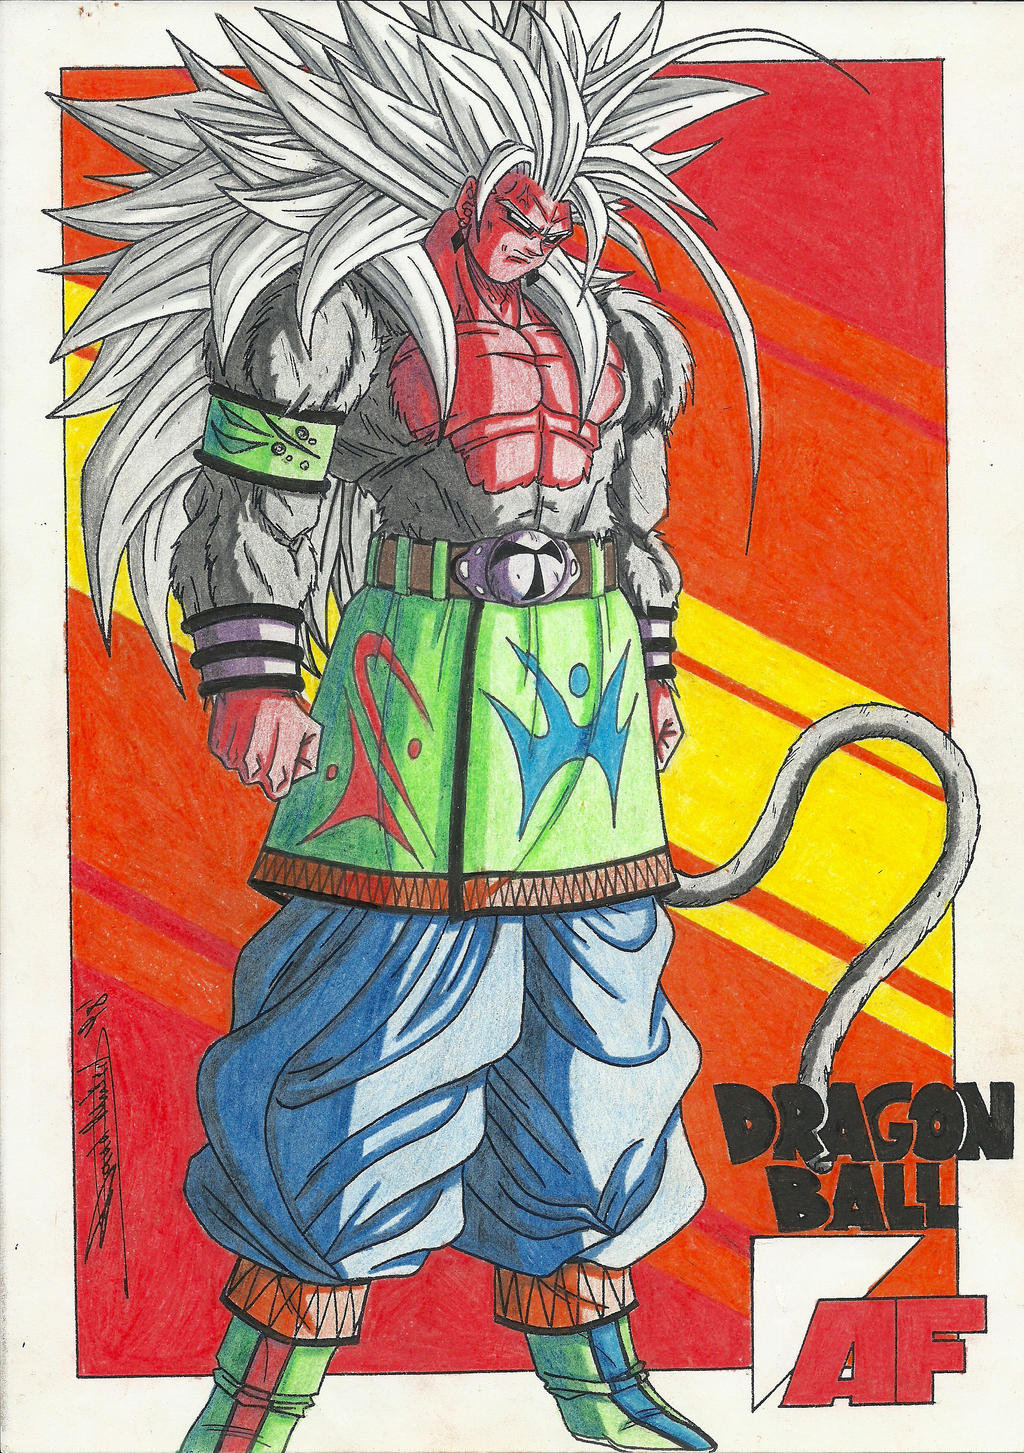 Tablos, the unknown Saiyan from Dragon Ball AF.